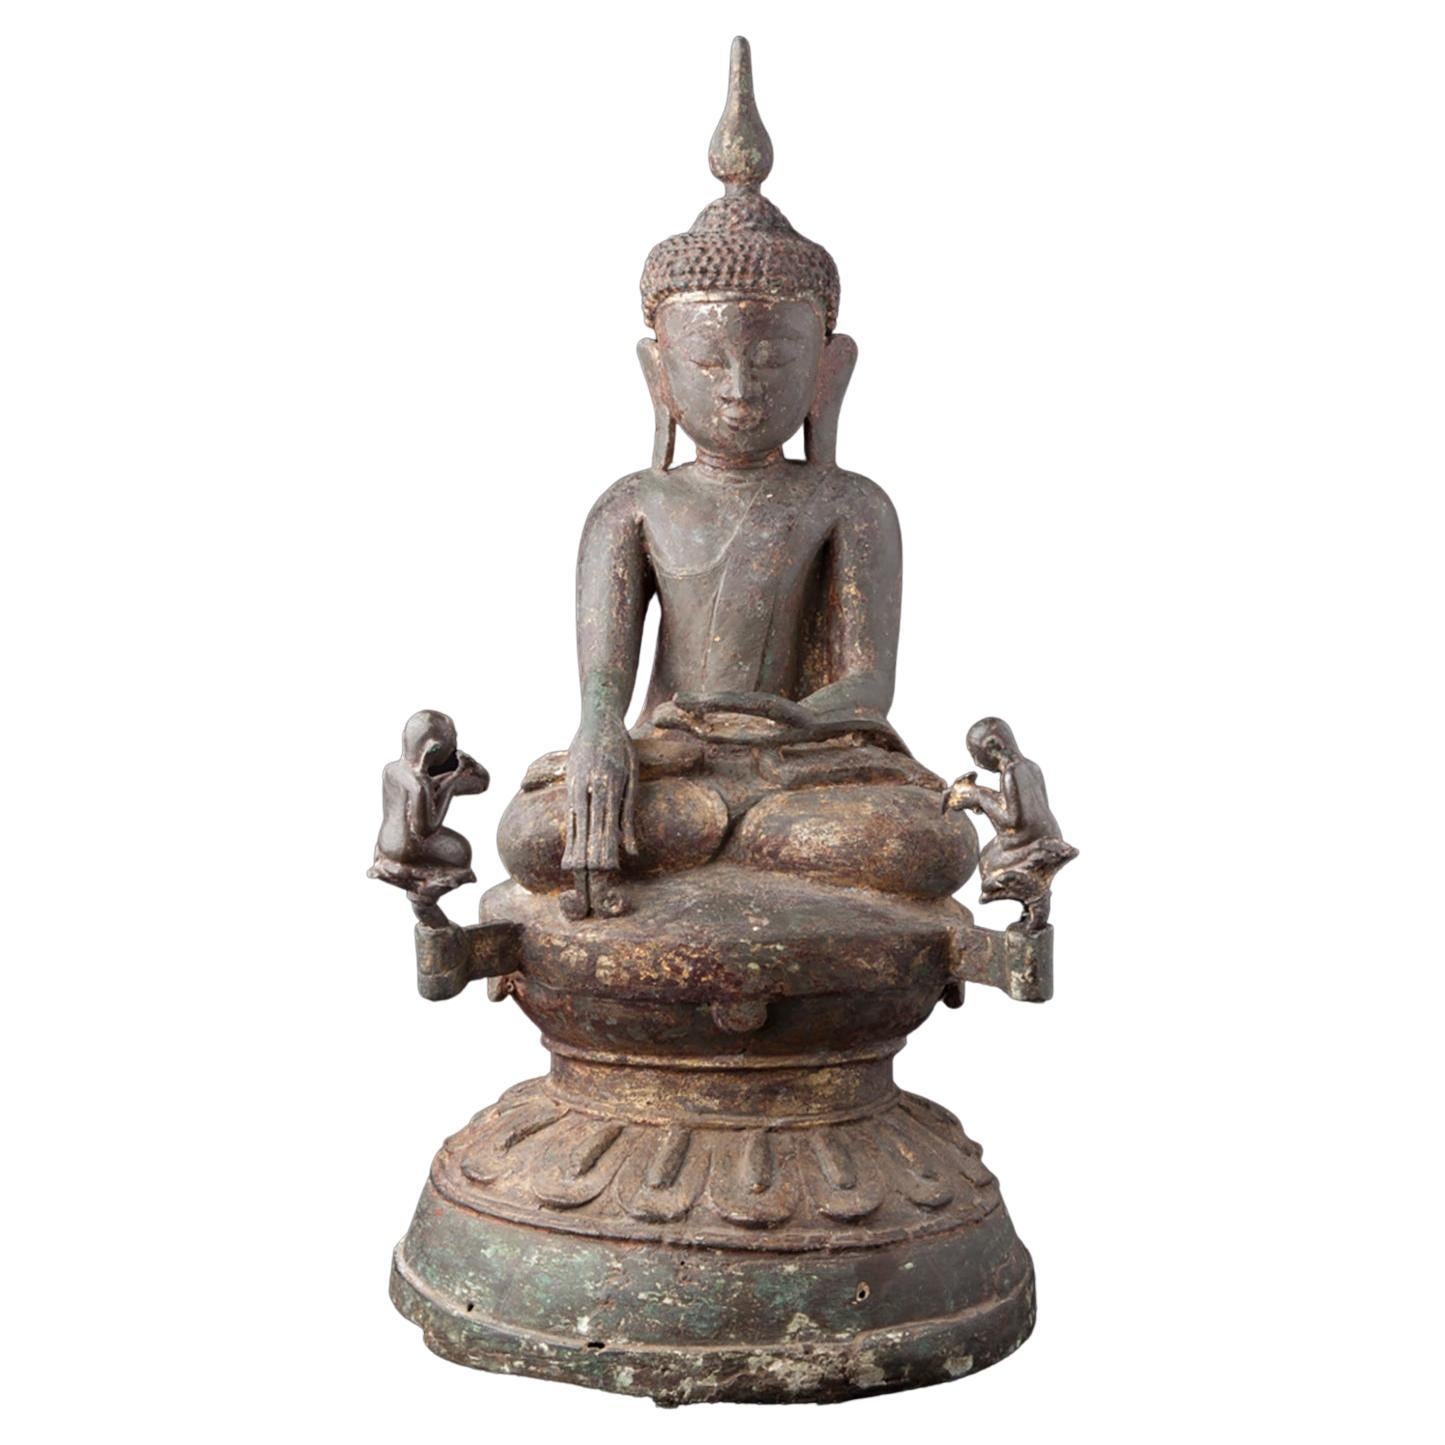 15-16th century special bronze Ava Buddha statue from Burma - Original Buddhas